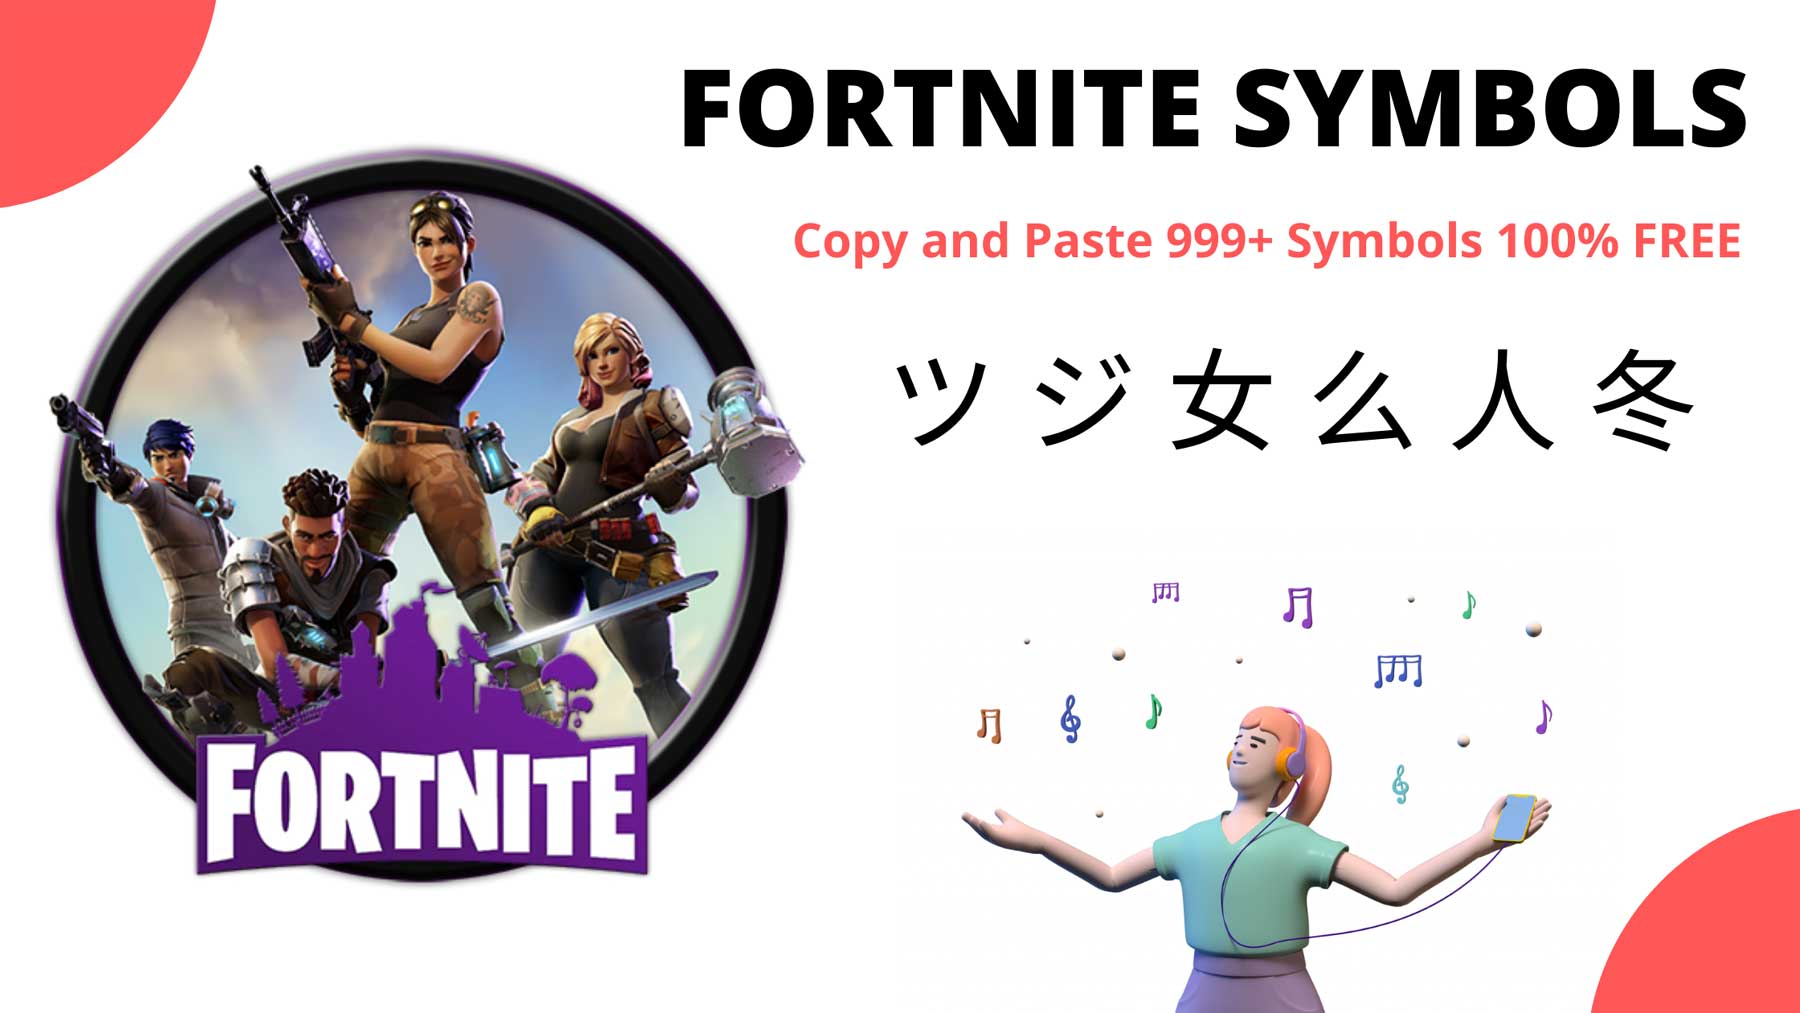 Fortnite Symbols 999+ Gaming Symbols